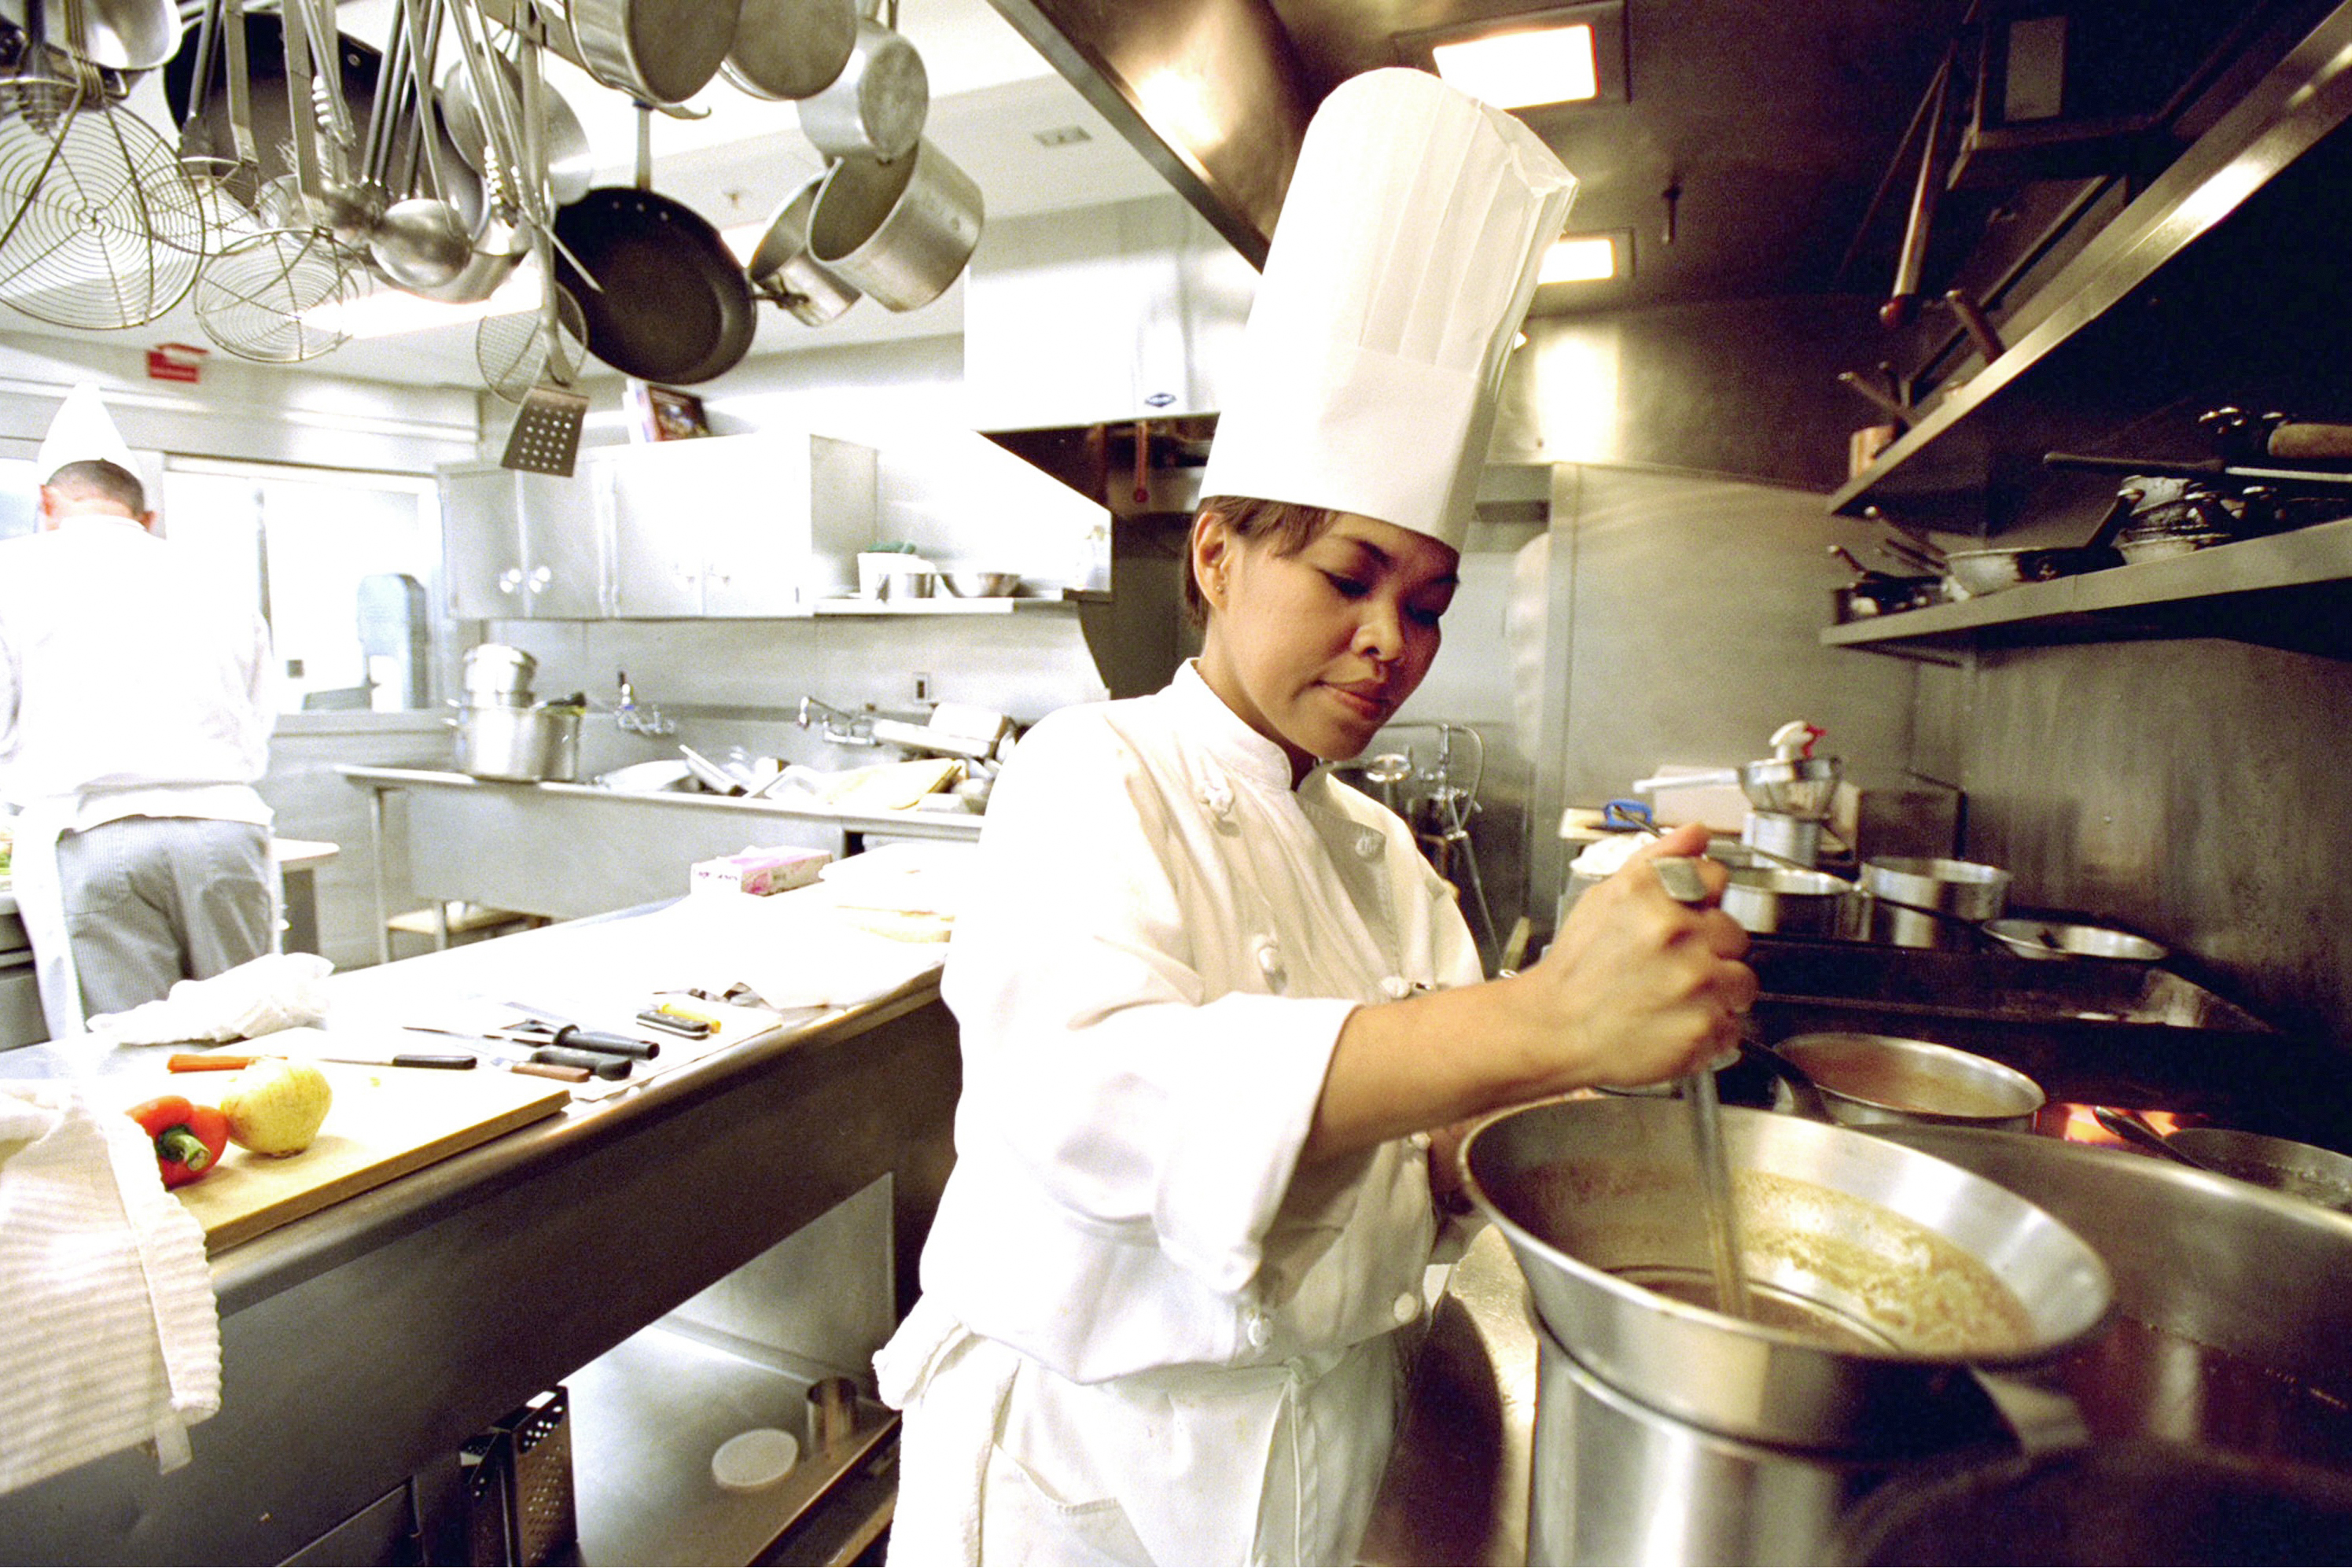 Повар столовой москва свежий. Ремо Маццукато шеф-повар. Шефа Ремо Маццукато. Кухня ресторана с поварами. Повар на кухне.